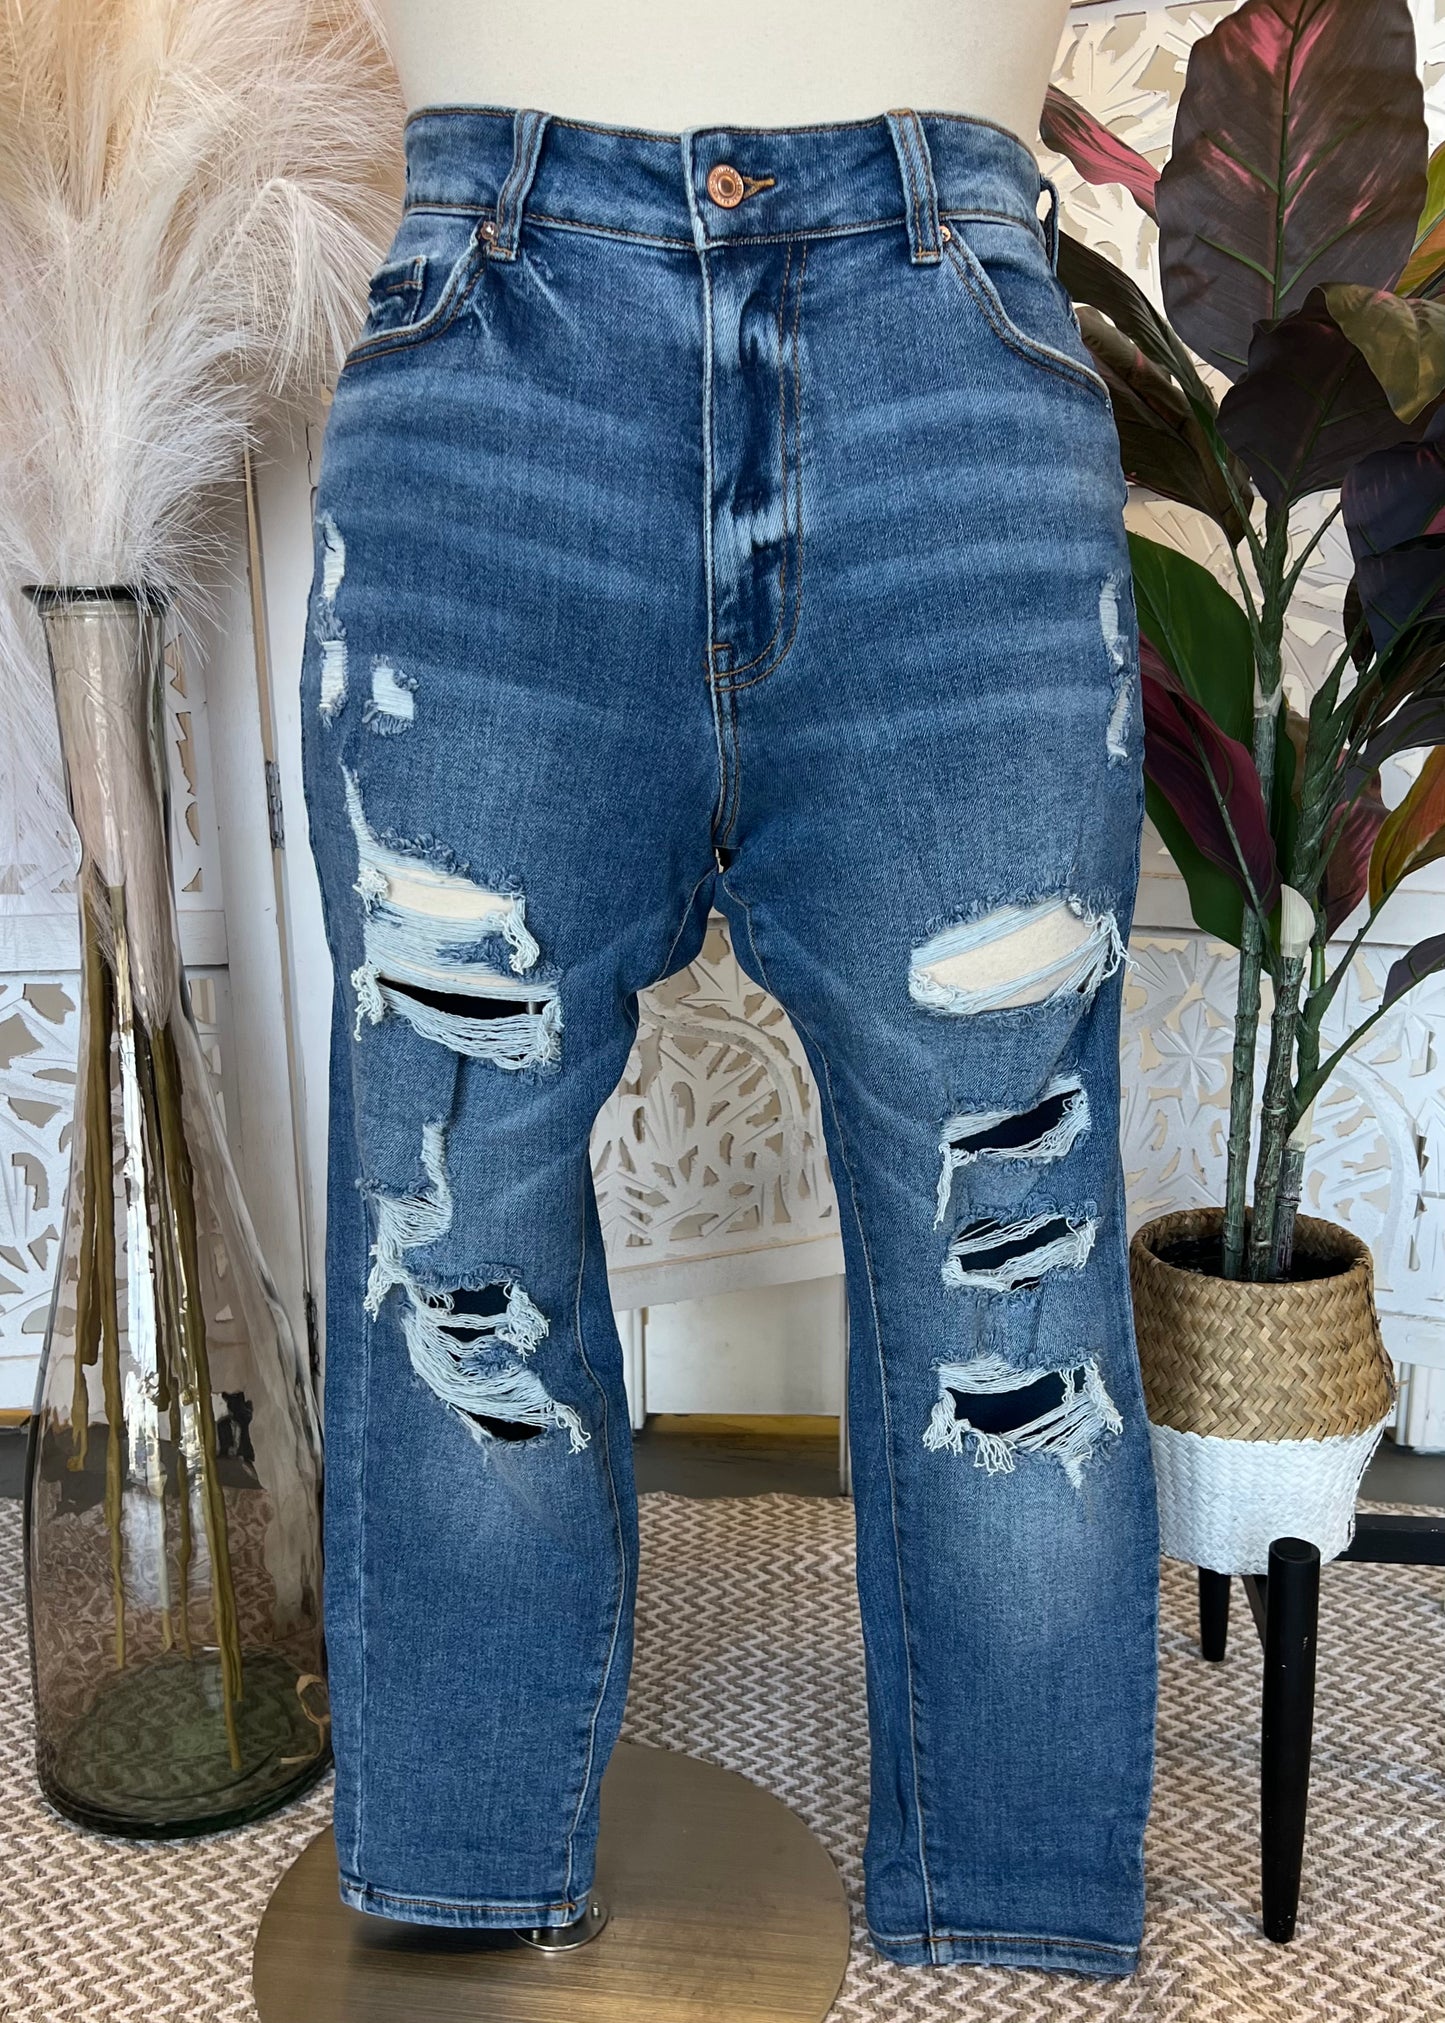 Mila Jeans